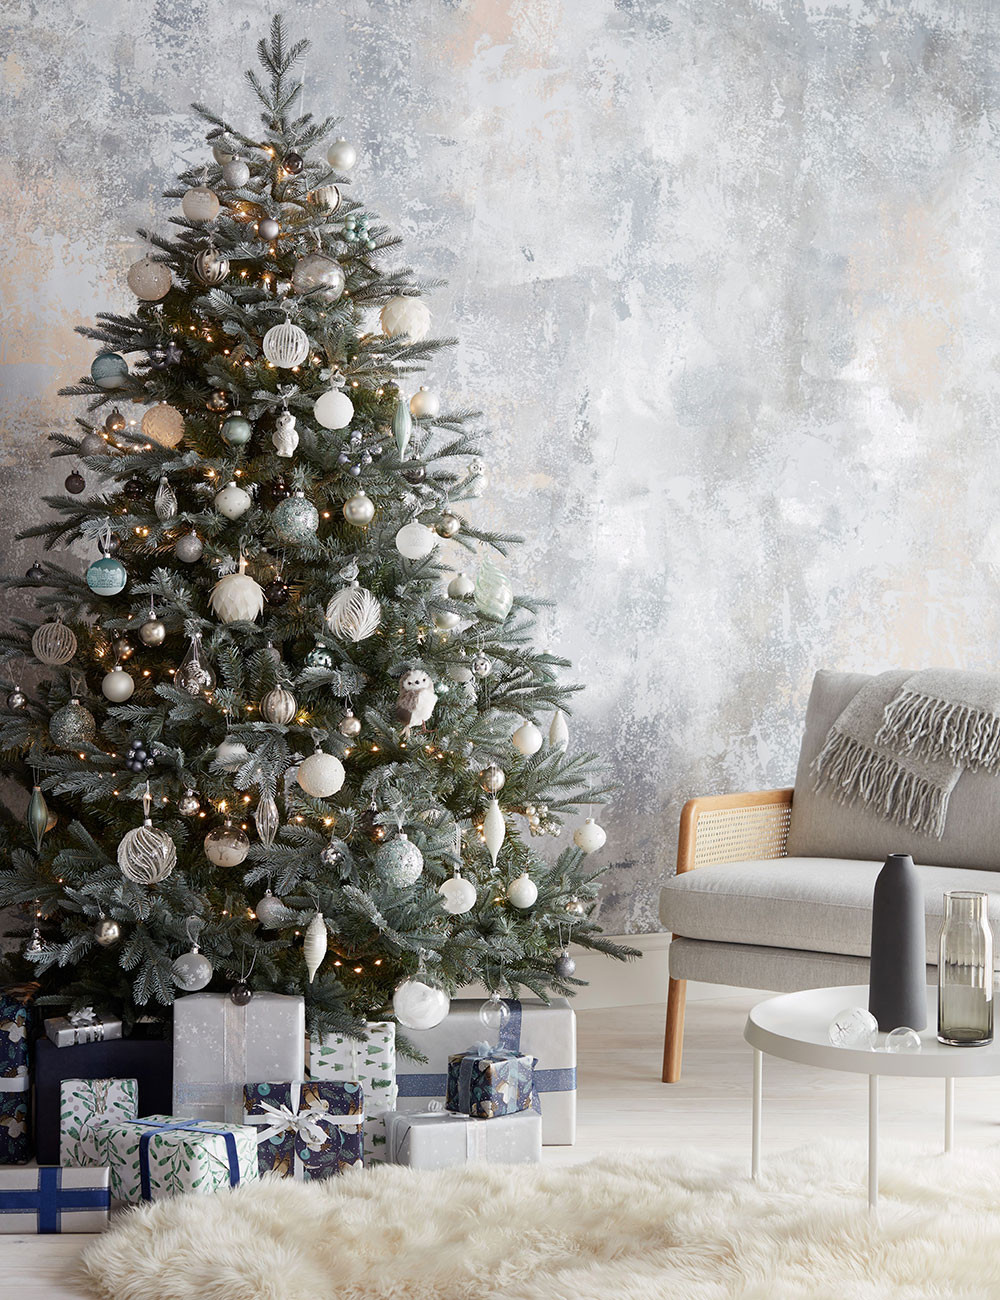 Christmas Tree Decorating Ideas 2020
 See the John Lewis Christmas tree decorating trends 2019